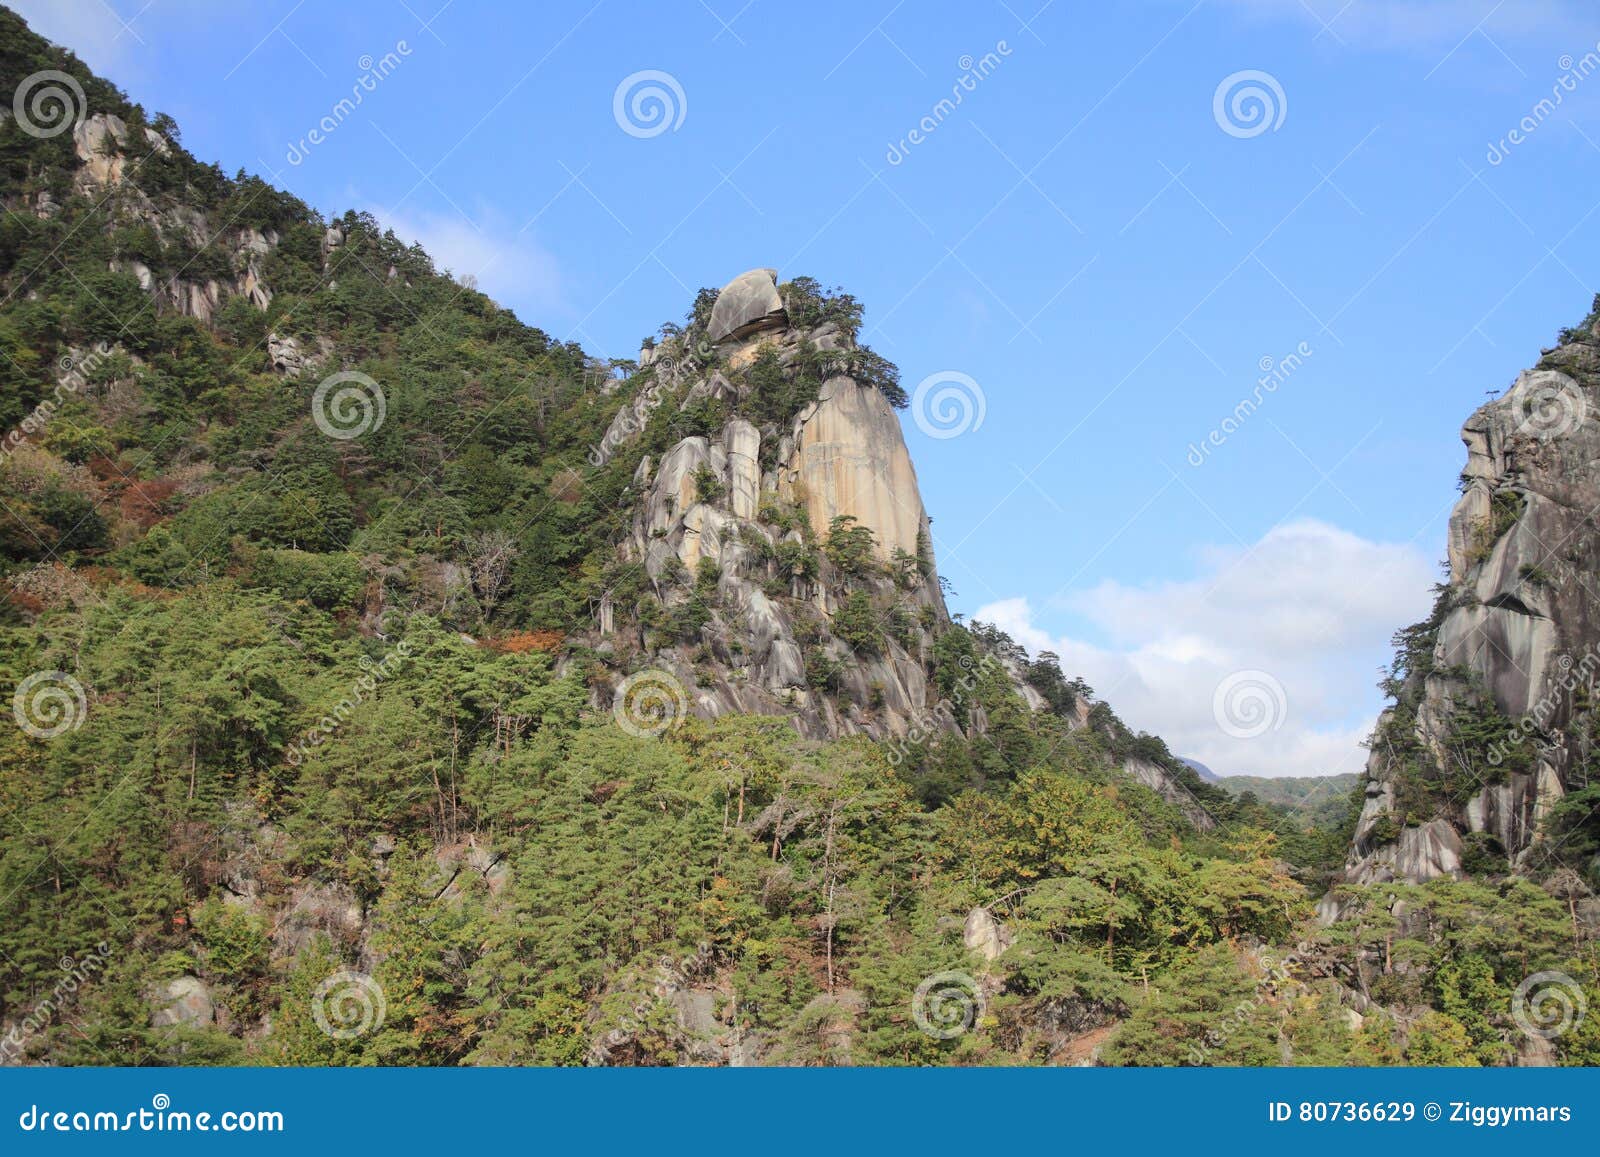 Mitake Shosenkyo Gorges and Kakuenbo Stock Image - Image of forest ...